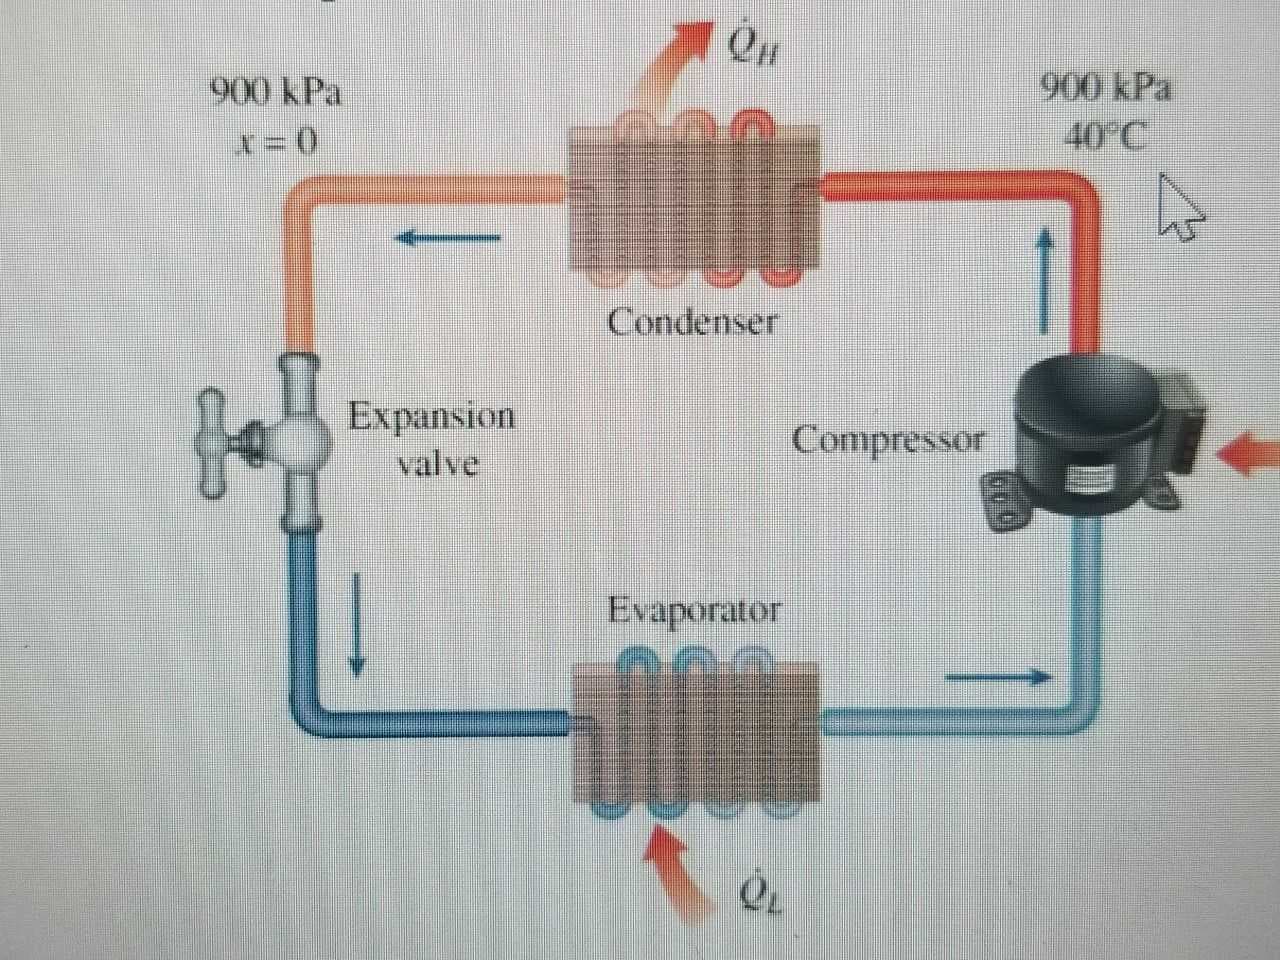 900 kPa
900 kPa
40°C
Condenser
Expansion
valve
Compressor
Evaporator
